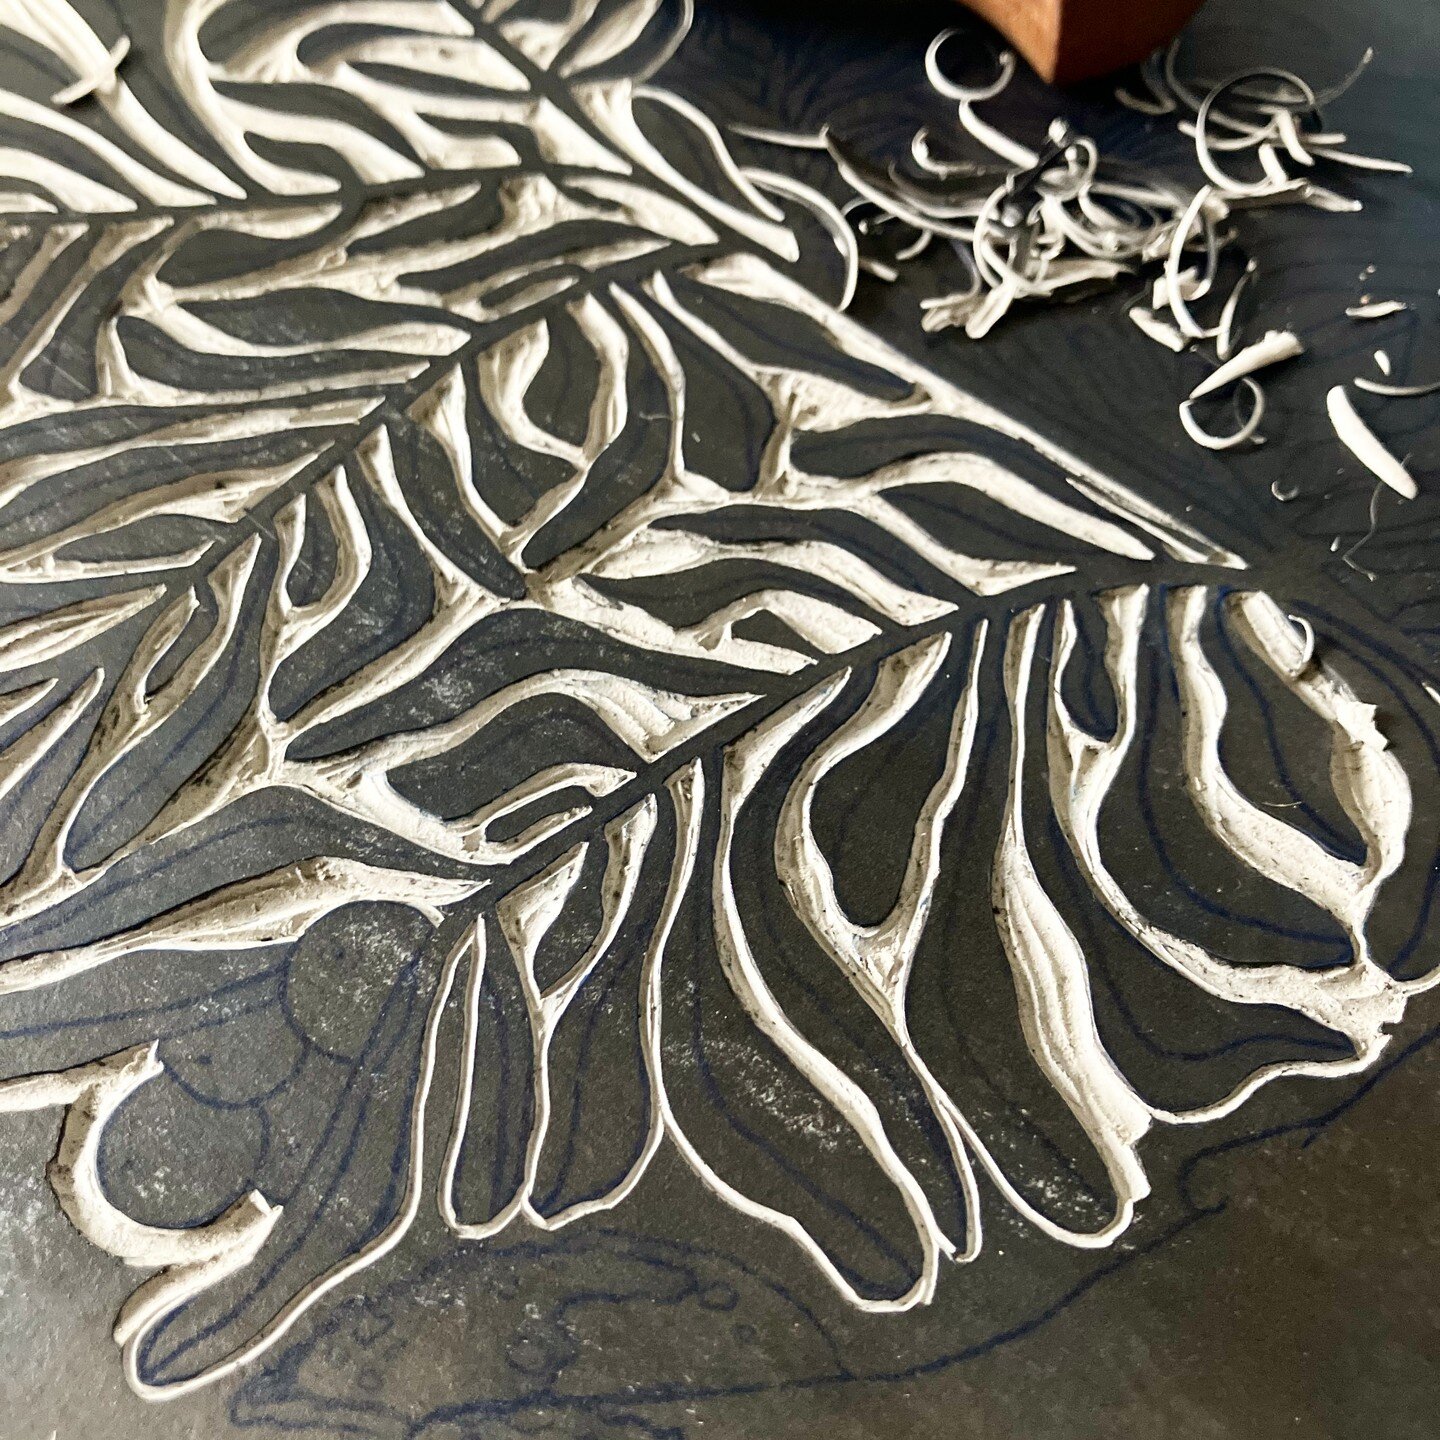 New print in the making!
.
.
.
.
.
.
.
#printmaker #linocutprint #linocut #linocutting #linocarving #printmakersofinstagram #irishhandmade #irishmade #reliefcarving #handcarvedstamp #reliefprinting #linolschnitt #linocutprintmaking #carvinglino